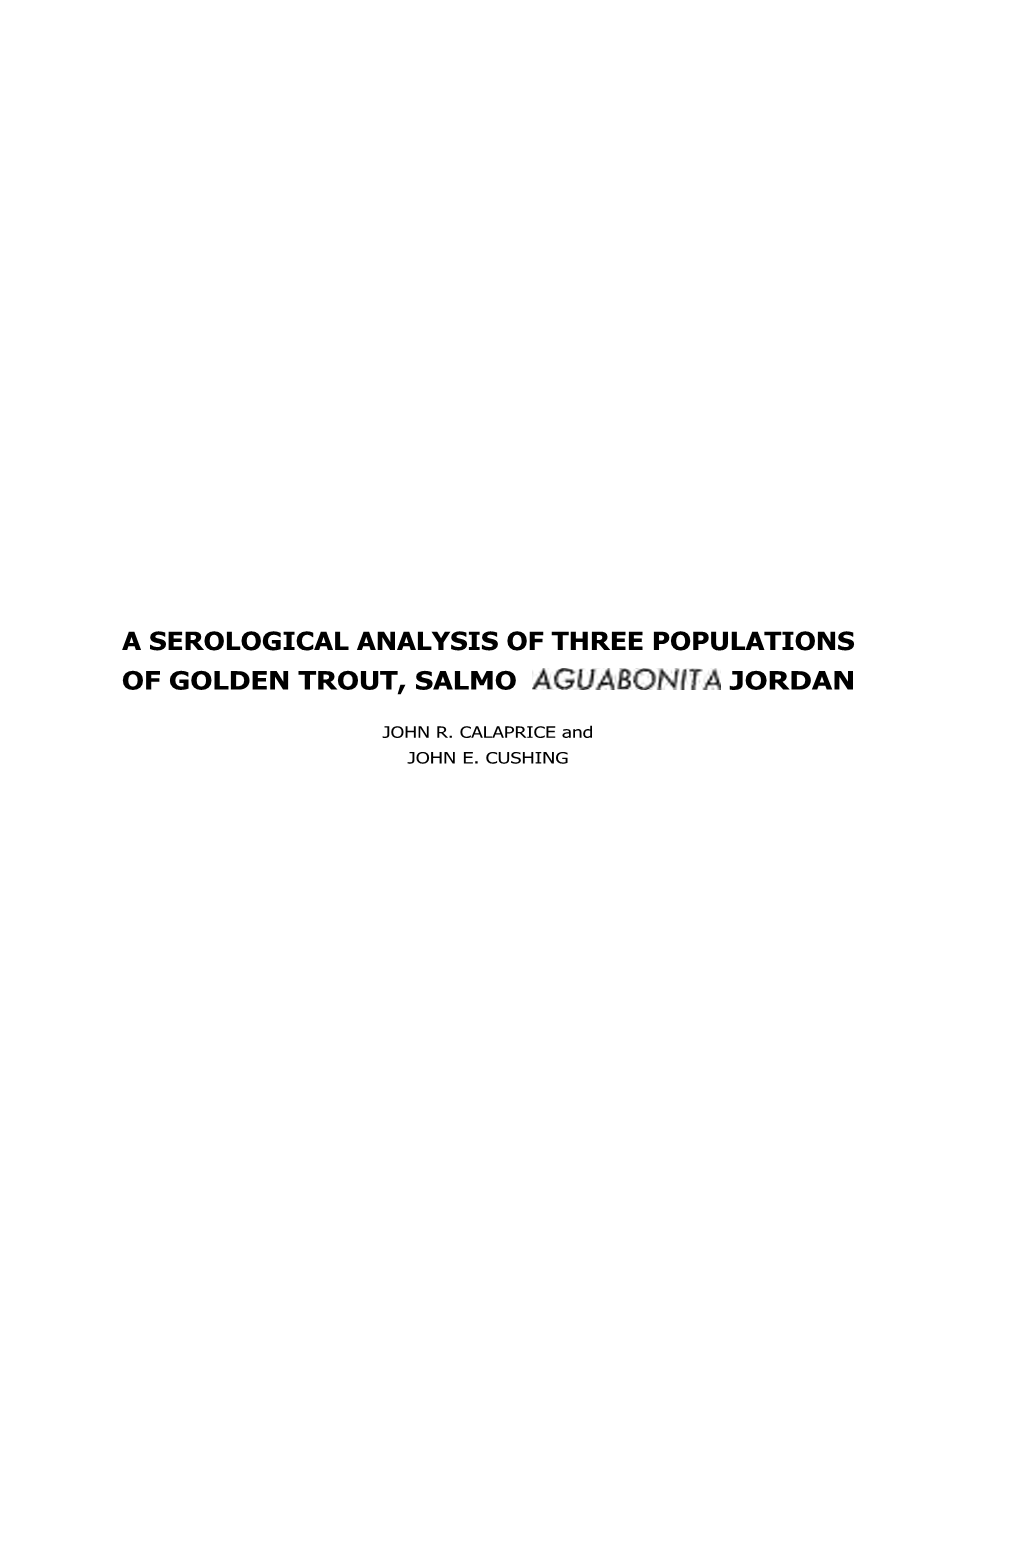 A Serological Analysis of Three Populations of Golden Trout, Salmo Aguabonita Jordan